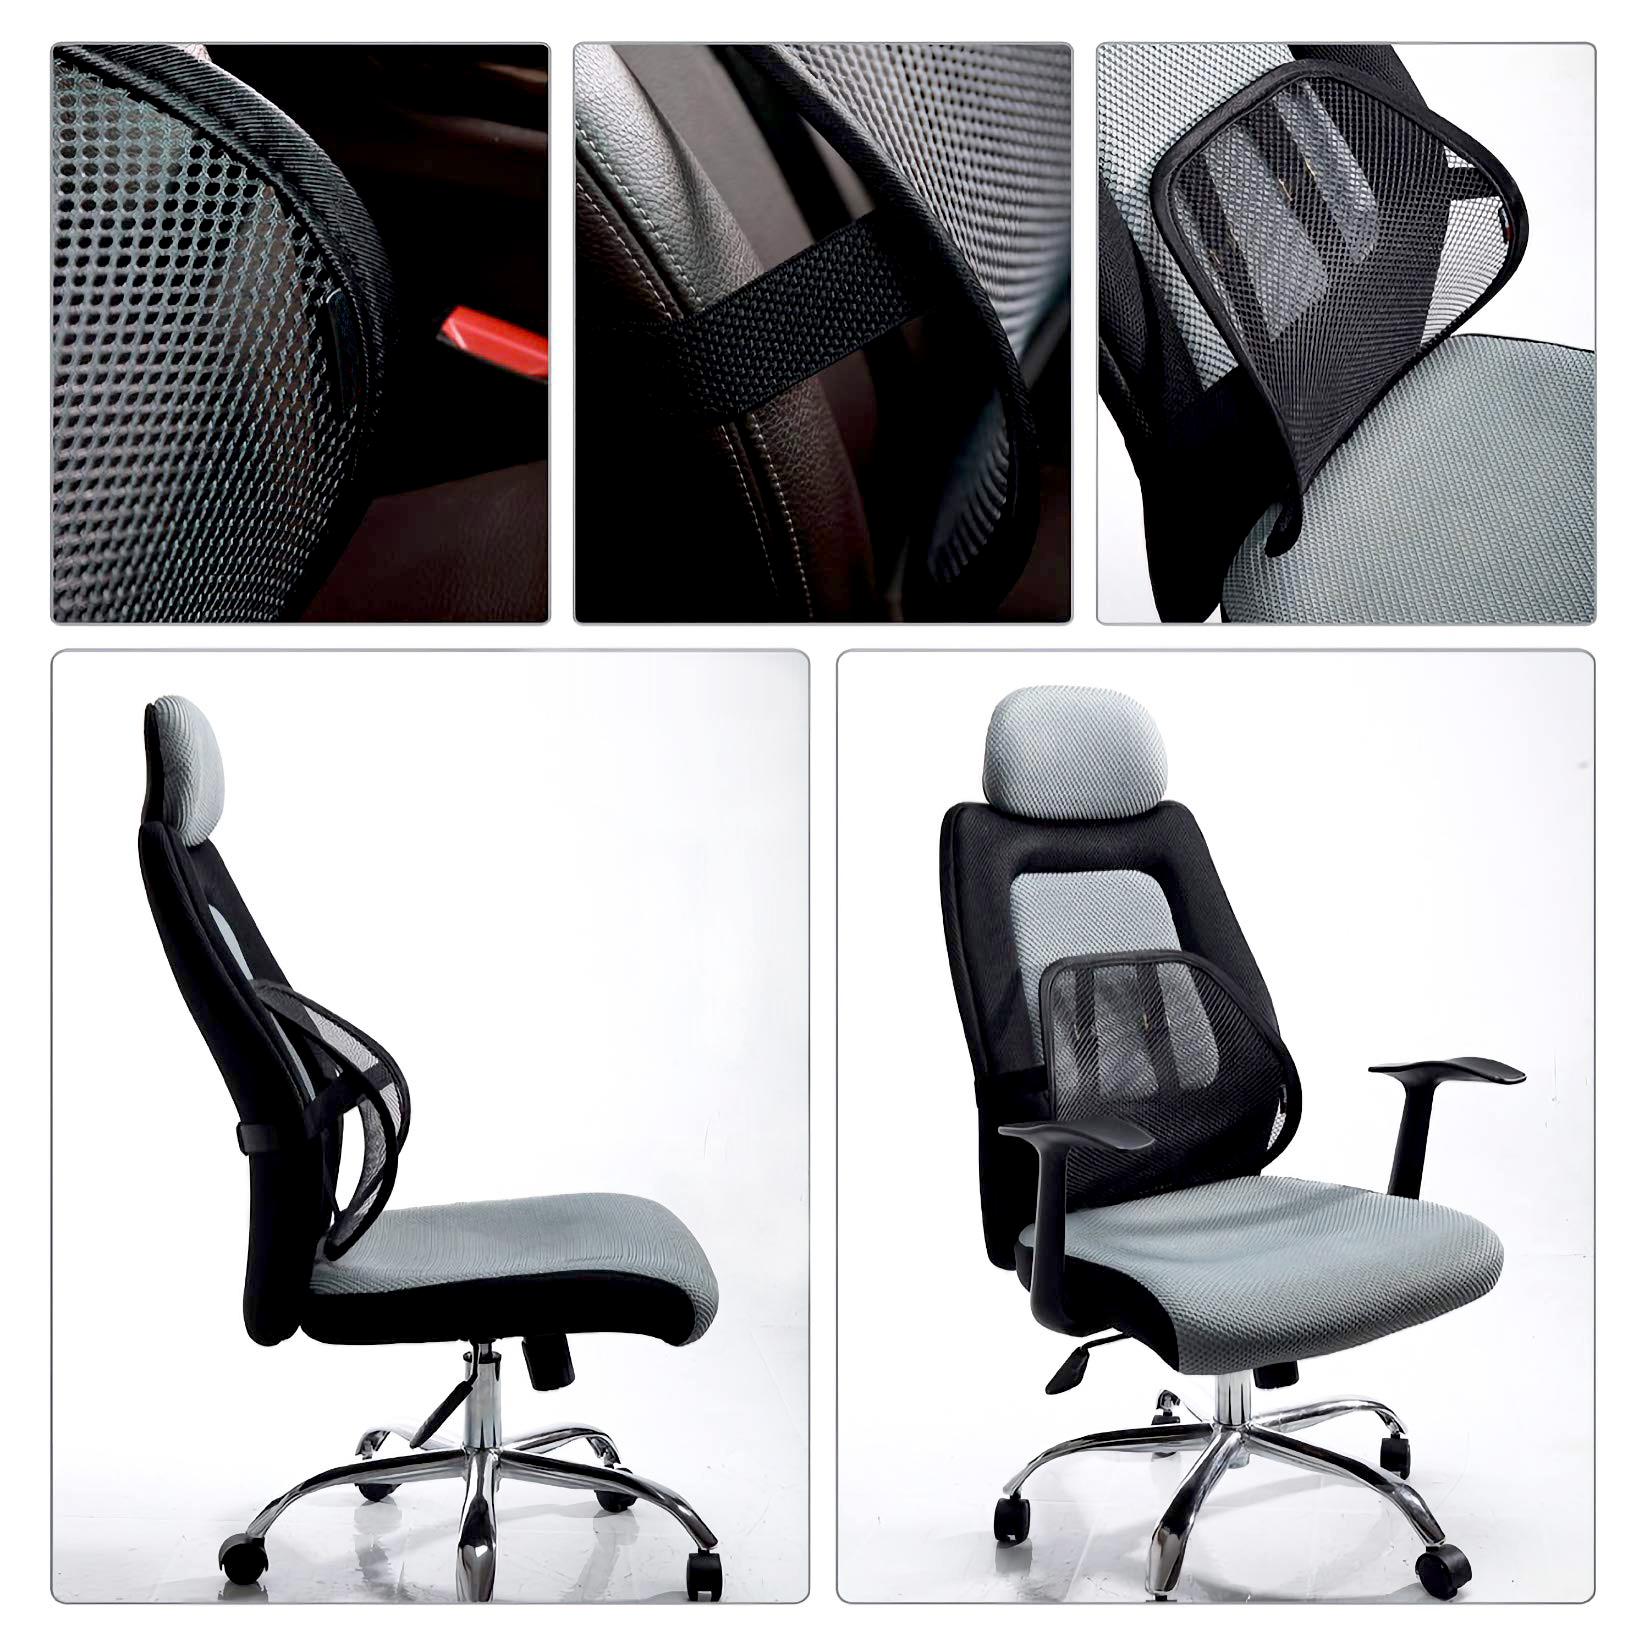 https://www.metacarecn.com/wp-content/uploads/2021/11/best-lumbar-support-cushion-for-office-chair-or-car-seat.jpg